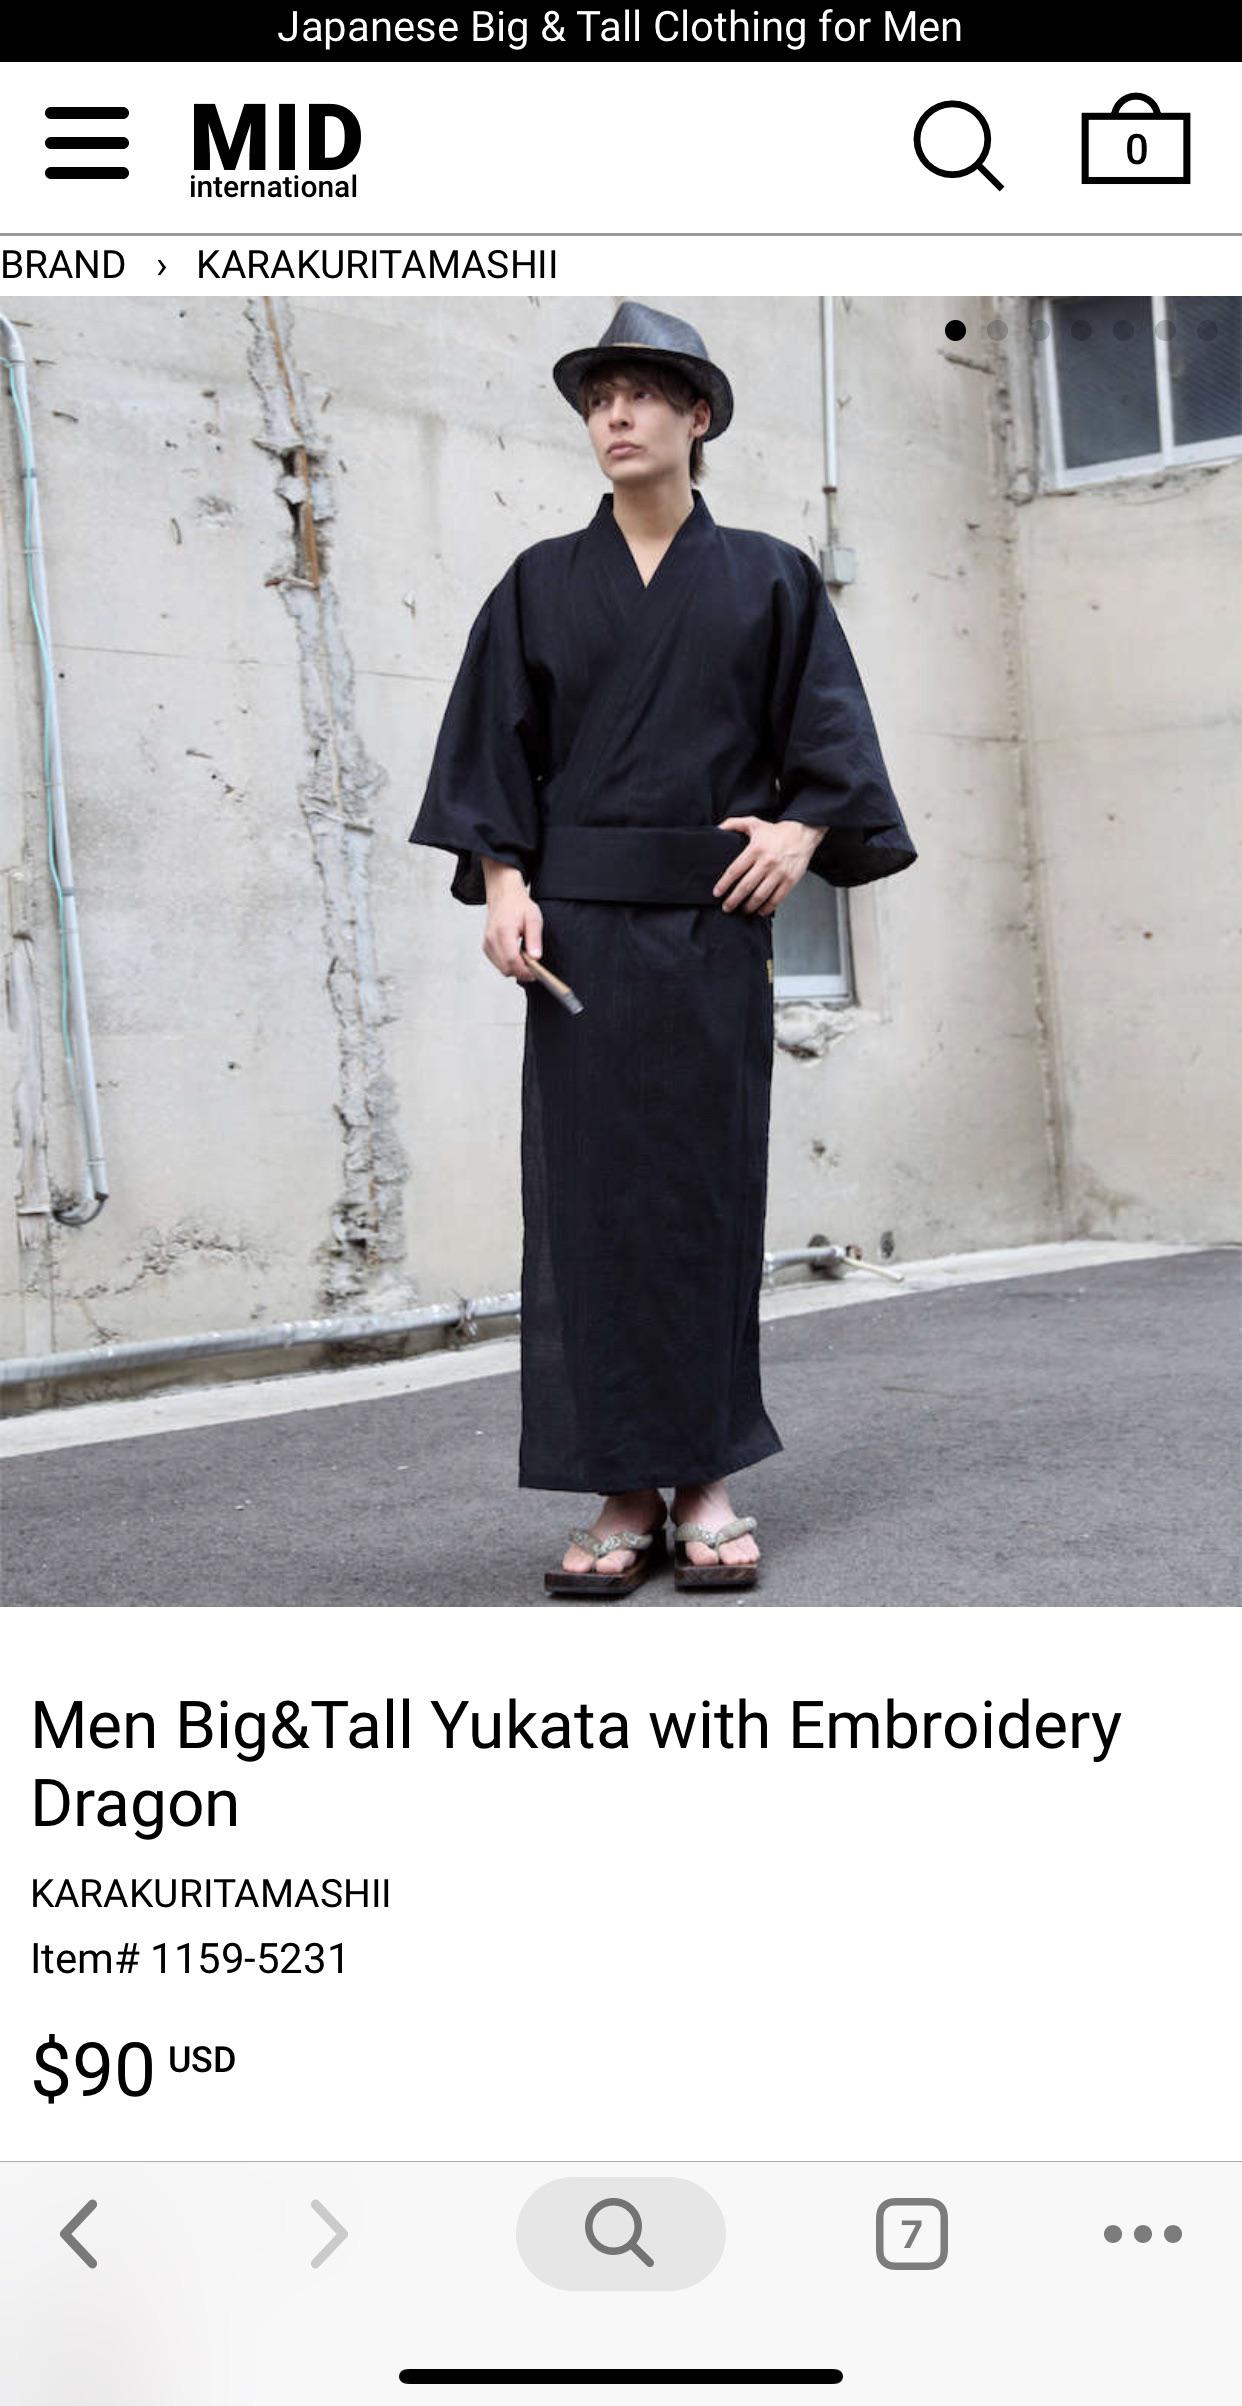 Japanese Big & Tall Clothing for Men Mid international Brand Karakuritamashii Men Big&Tall Yukata with Embroidery Dragon Karakuritamashii Item# 11595231 $90 Usd  Q ...